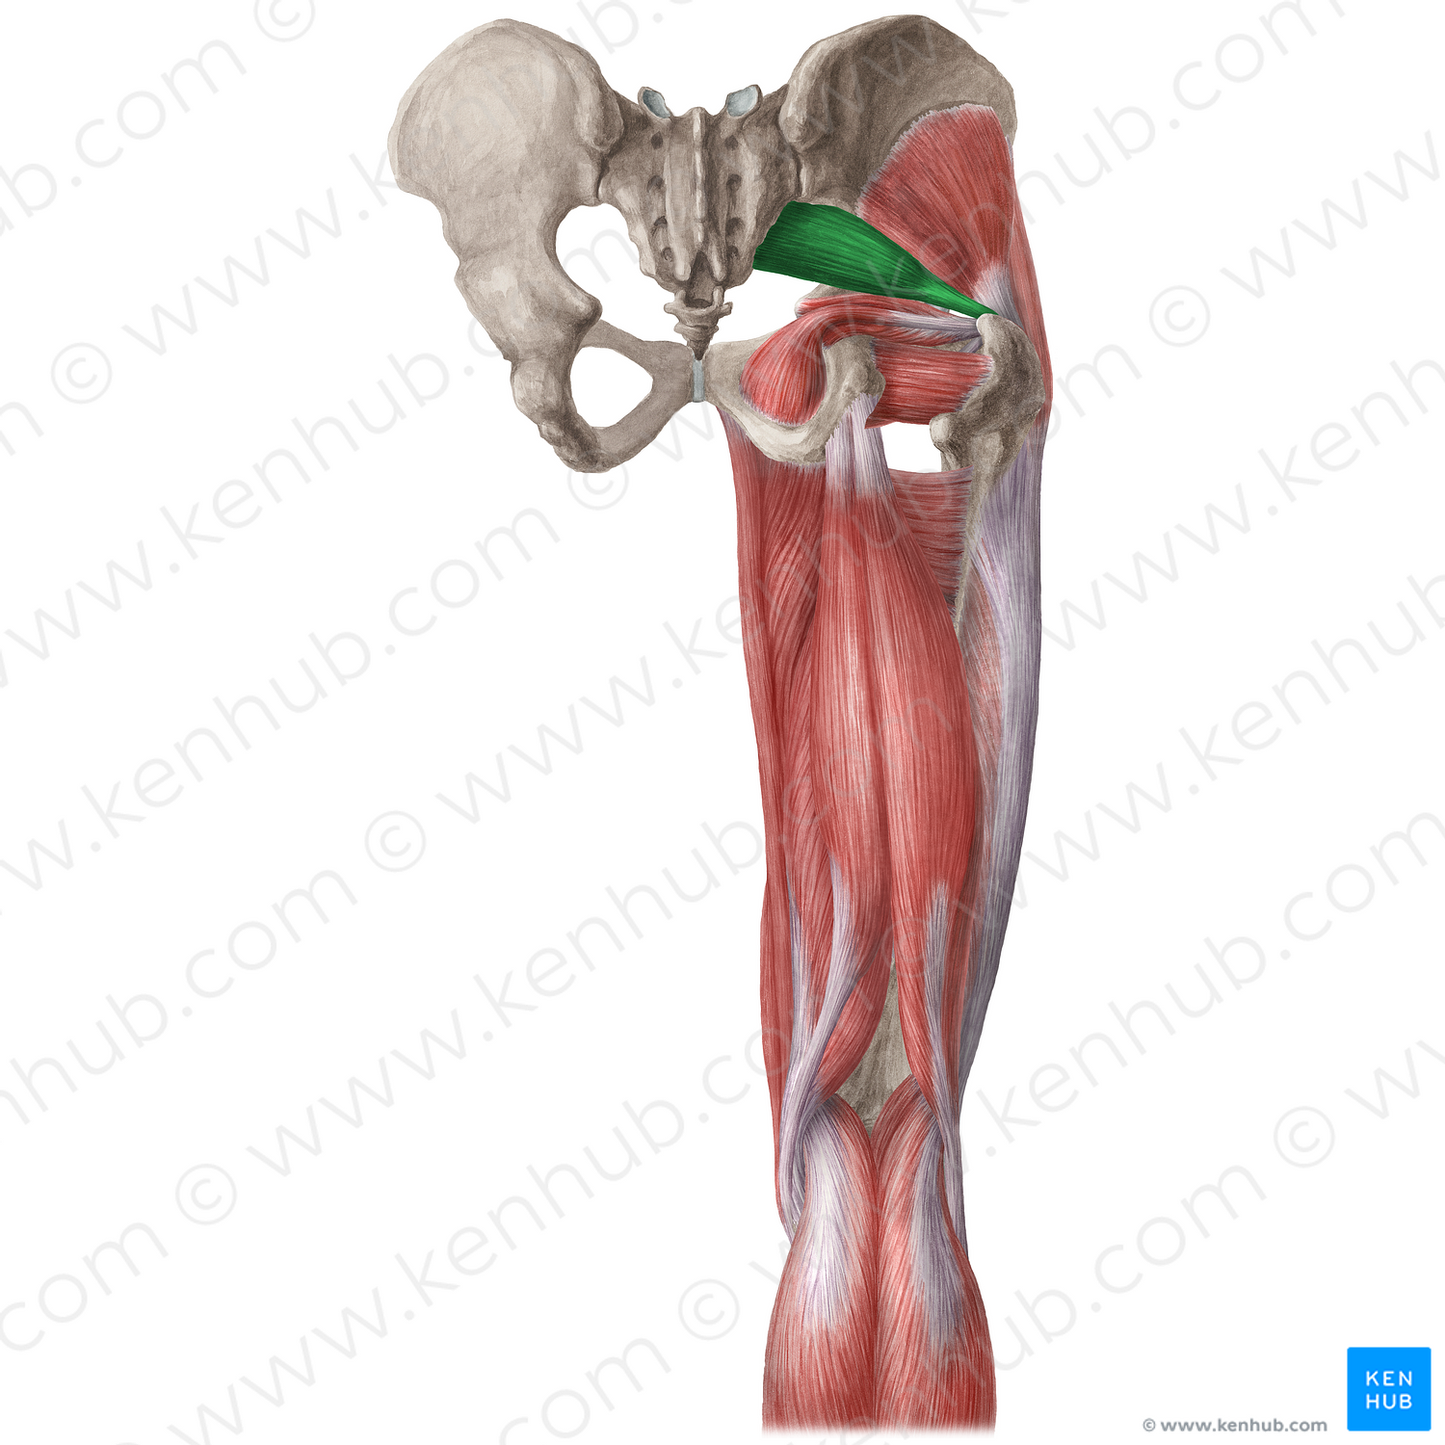 Piriformis muscle (#5761)